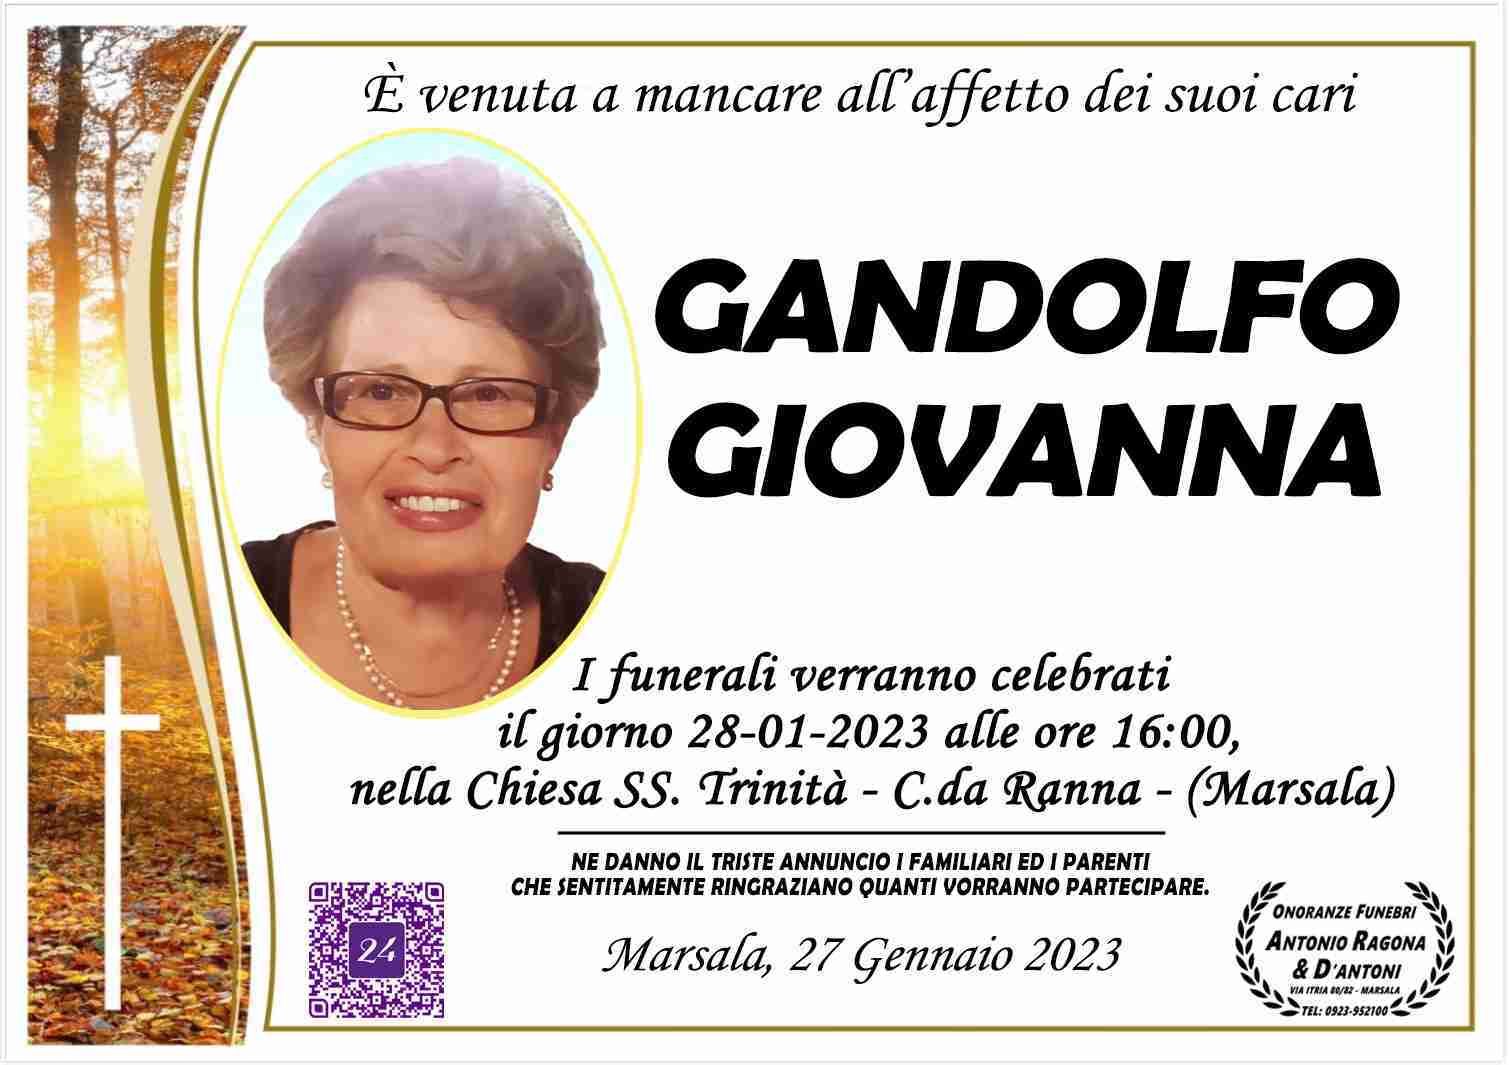 Giovanna Gandolfo